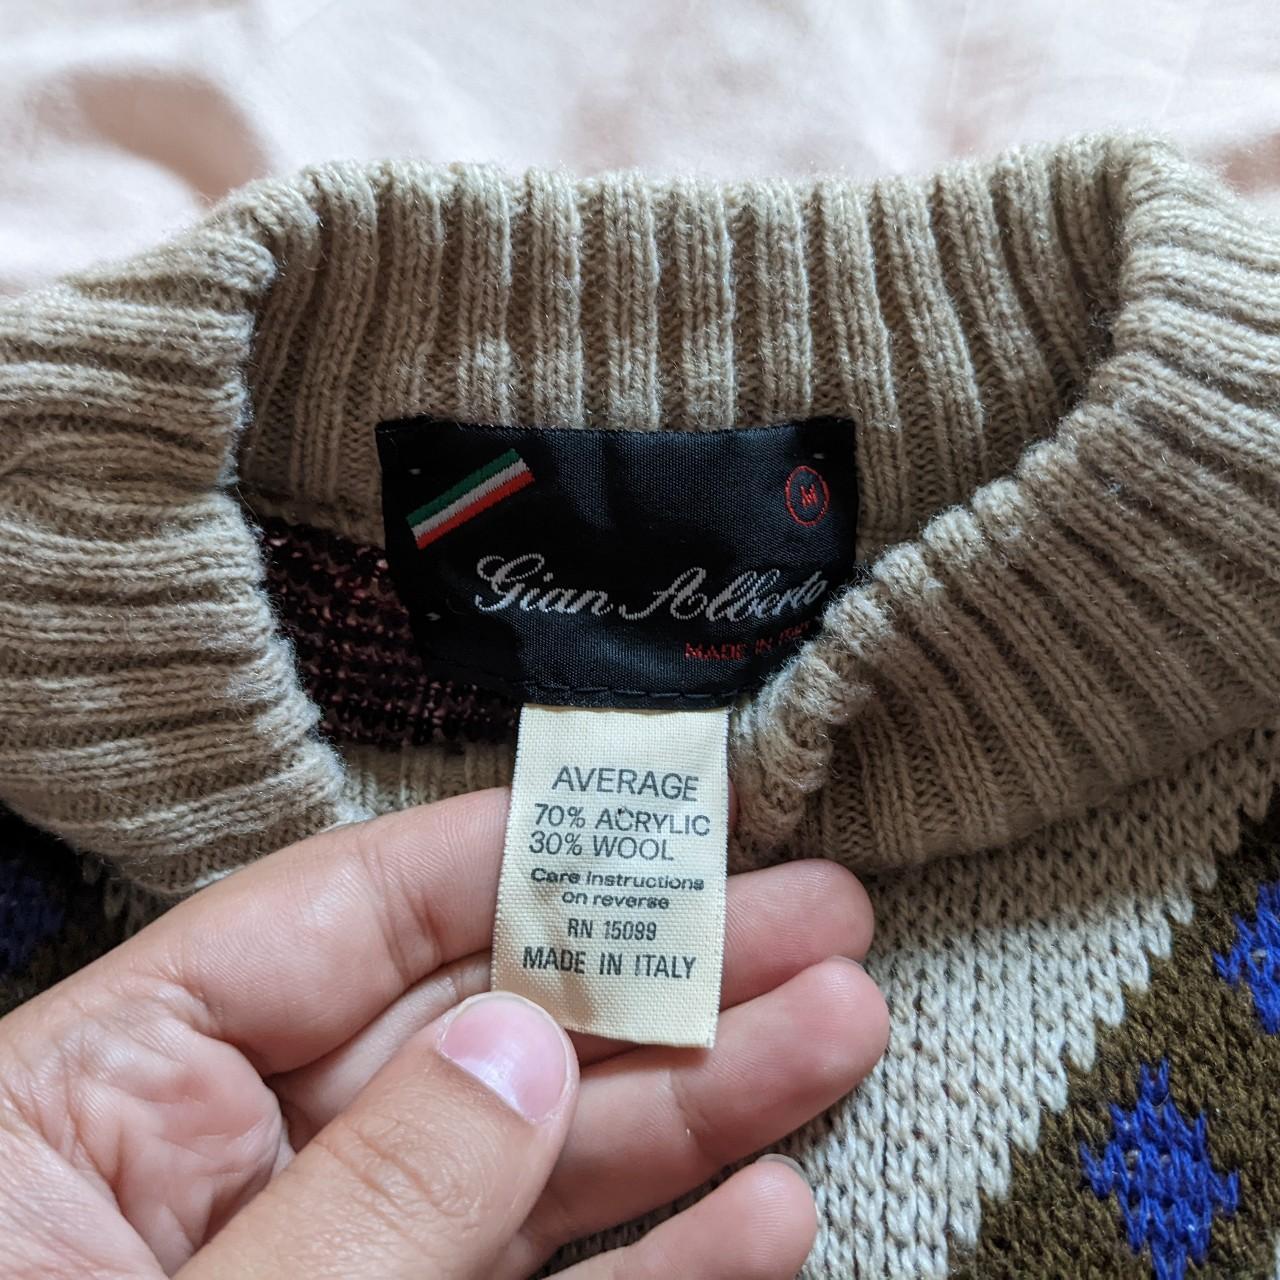 Product Image 2 - Medium Vintage Gian Alberto sweater
Wool/Acrylic